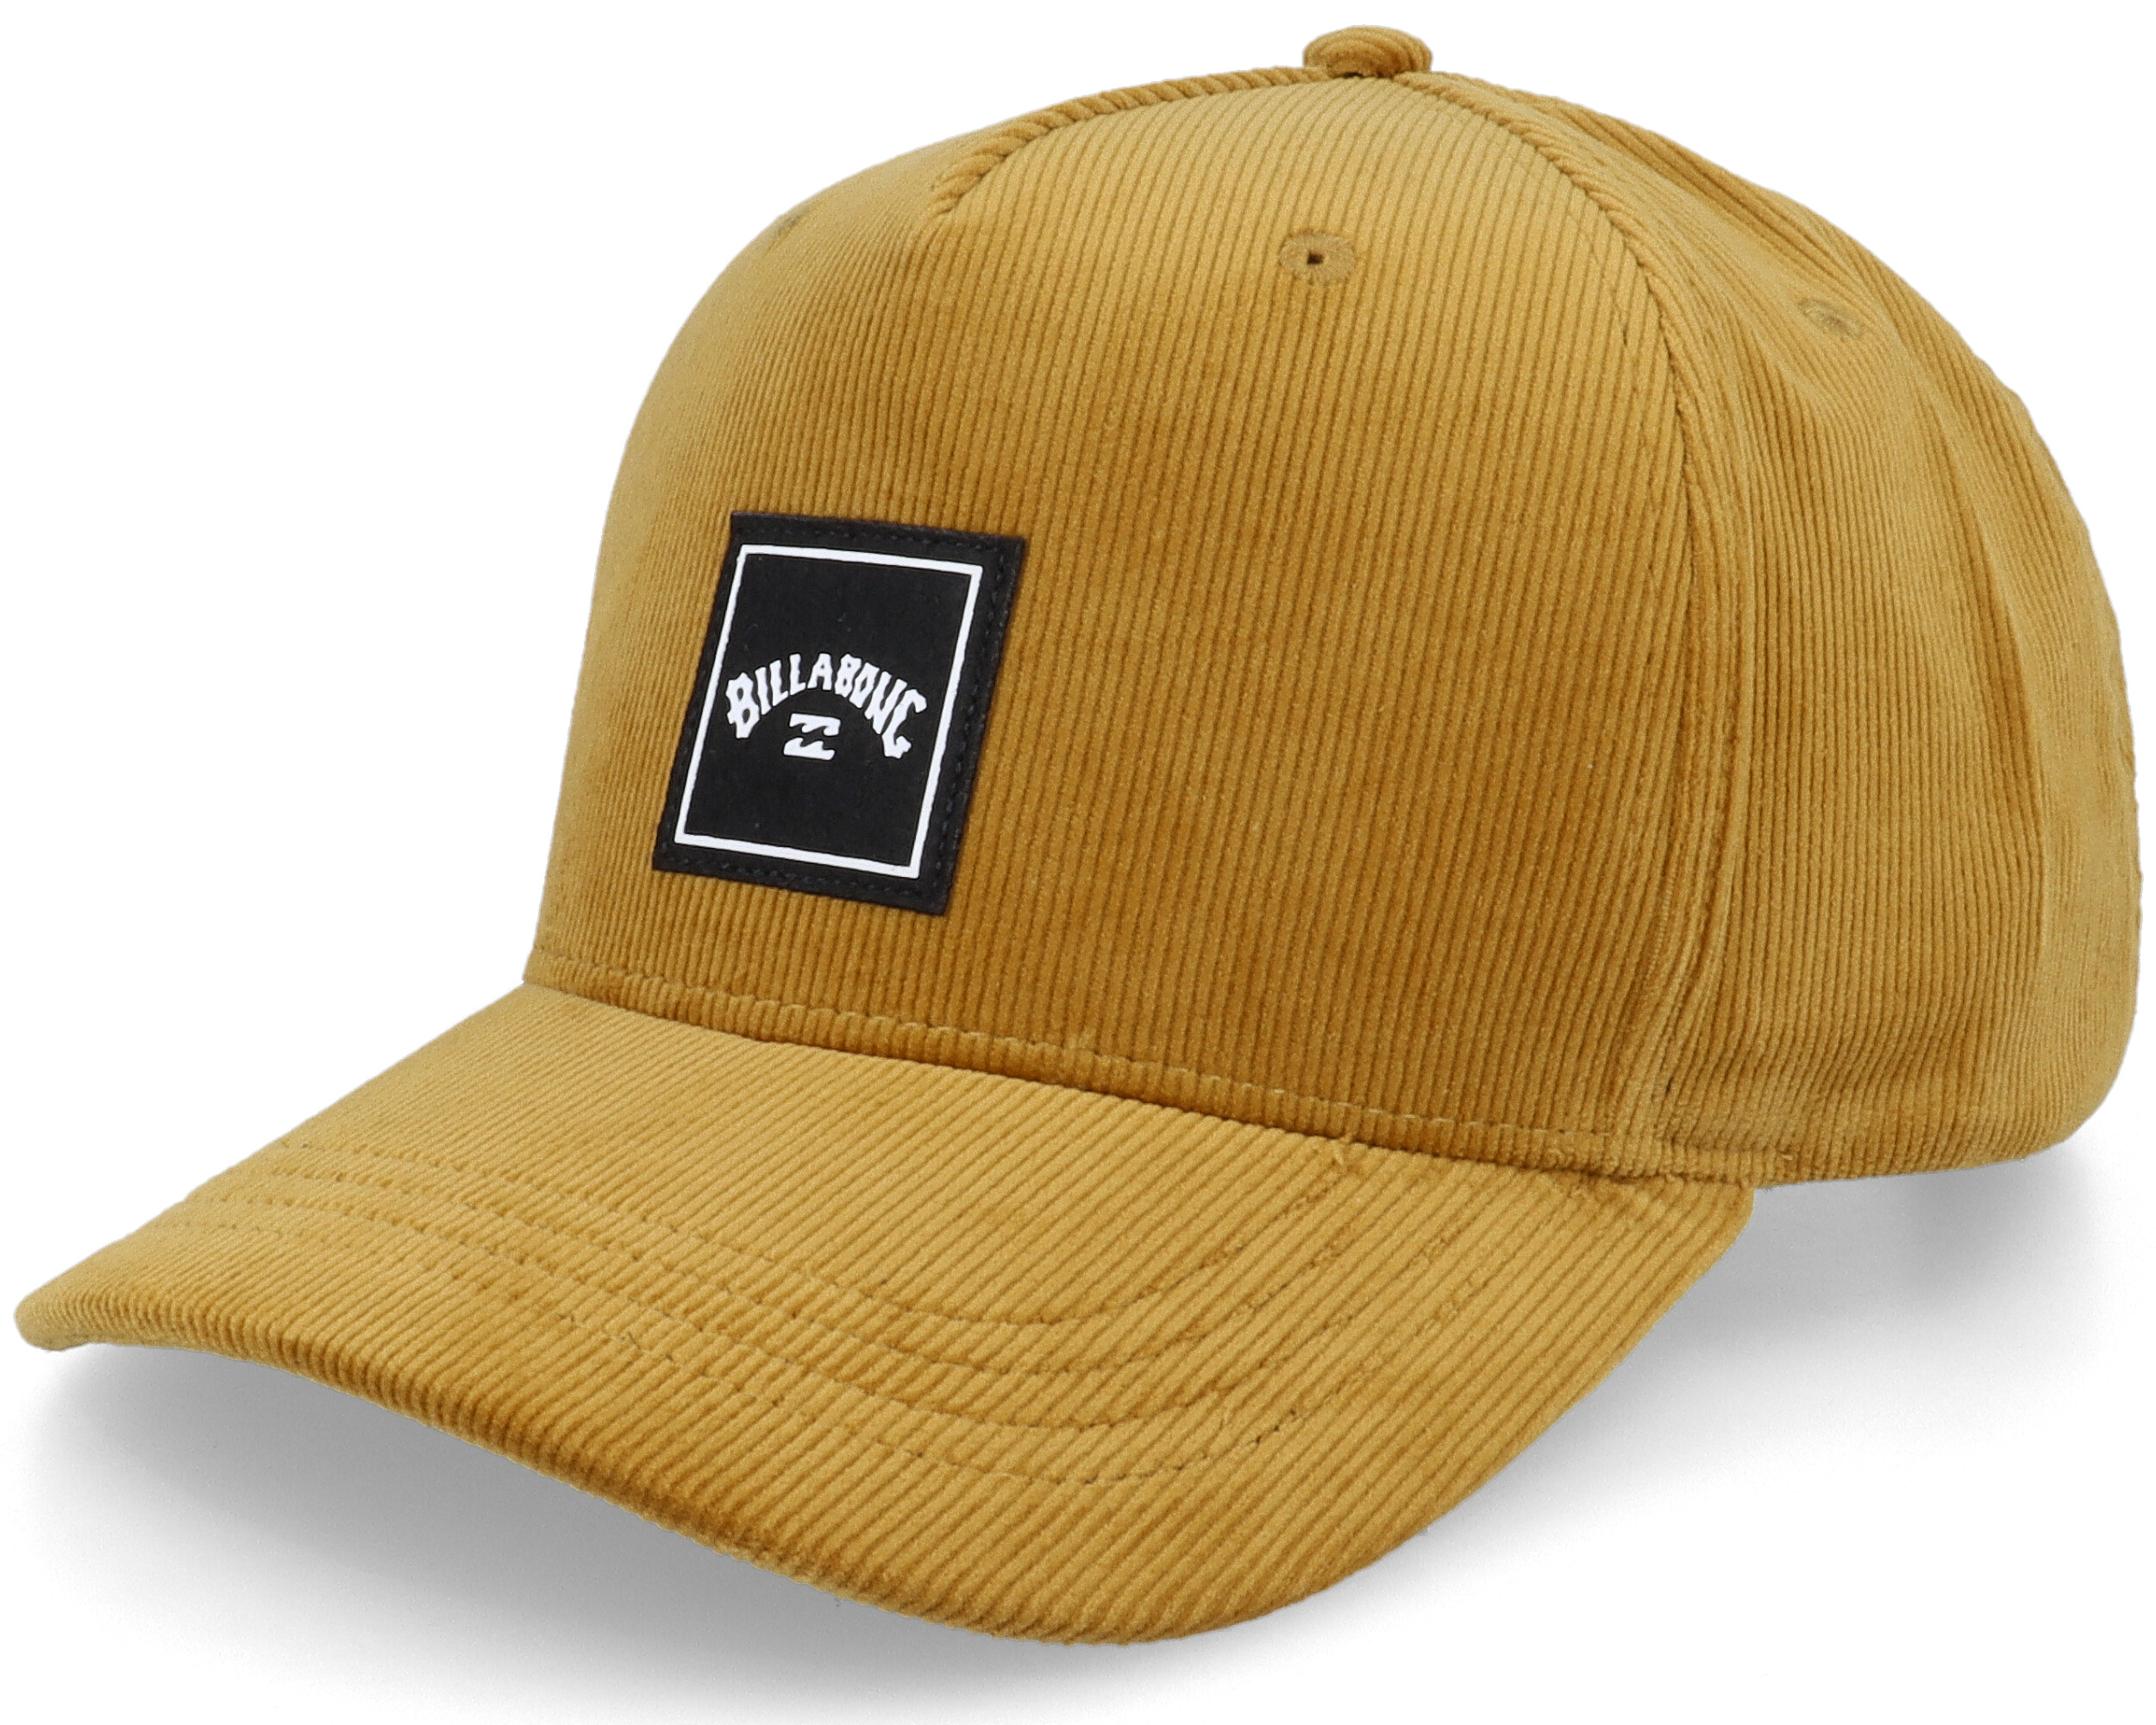 - Stacked Billabong Gold Adjustable cap